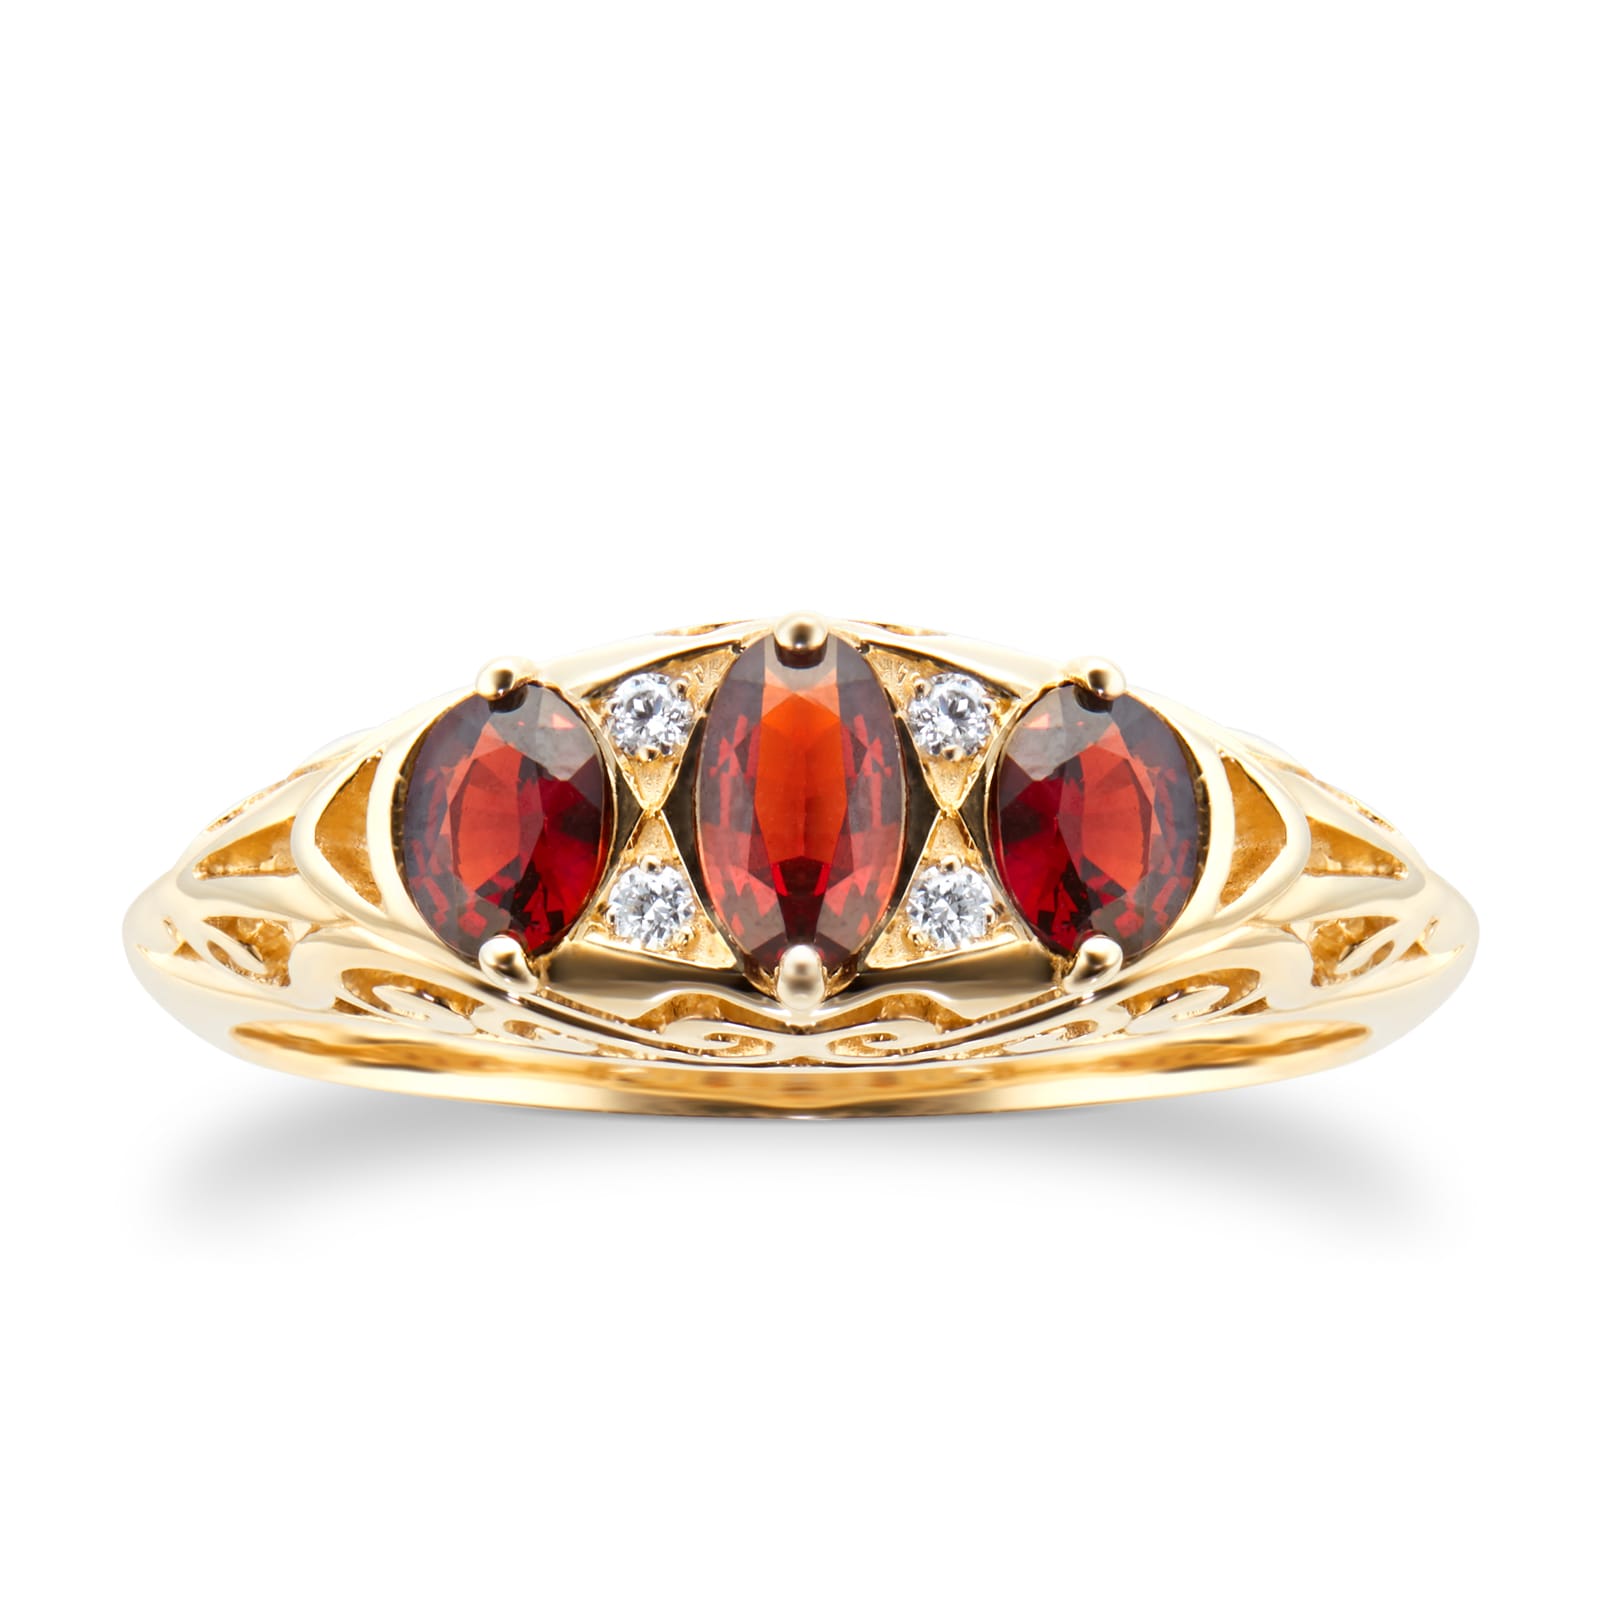 9ct Yellow Gold Victorian Style 3 Stone Garnet & Diamond Ring - Ring Size X.5